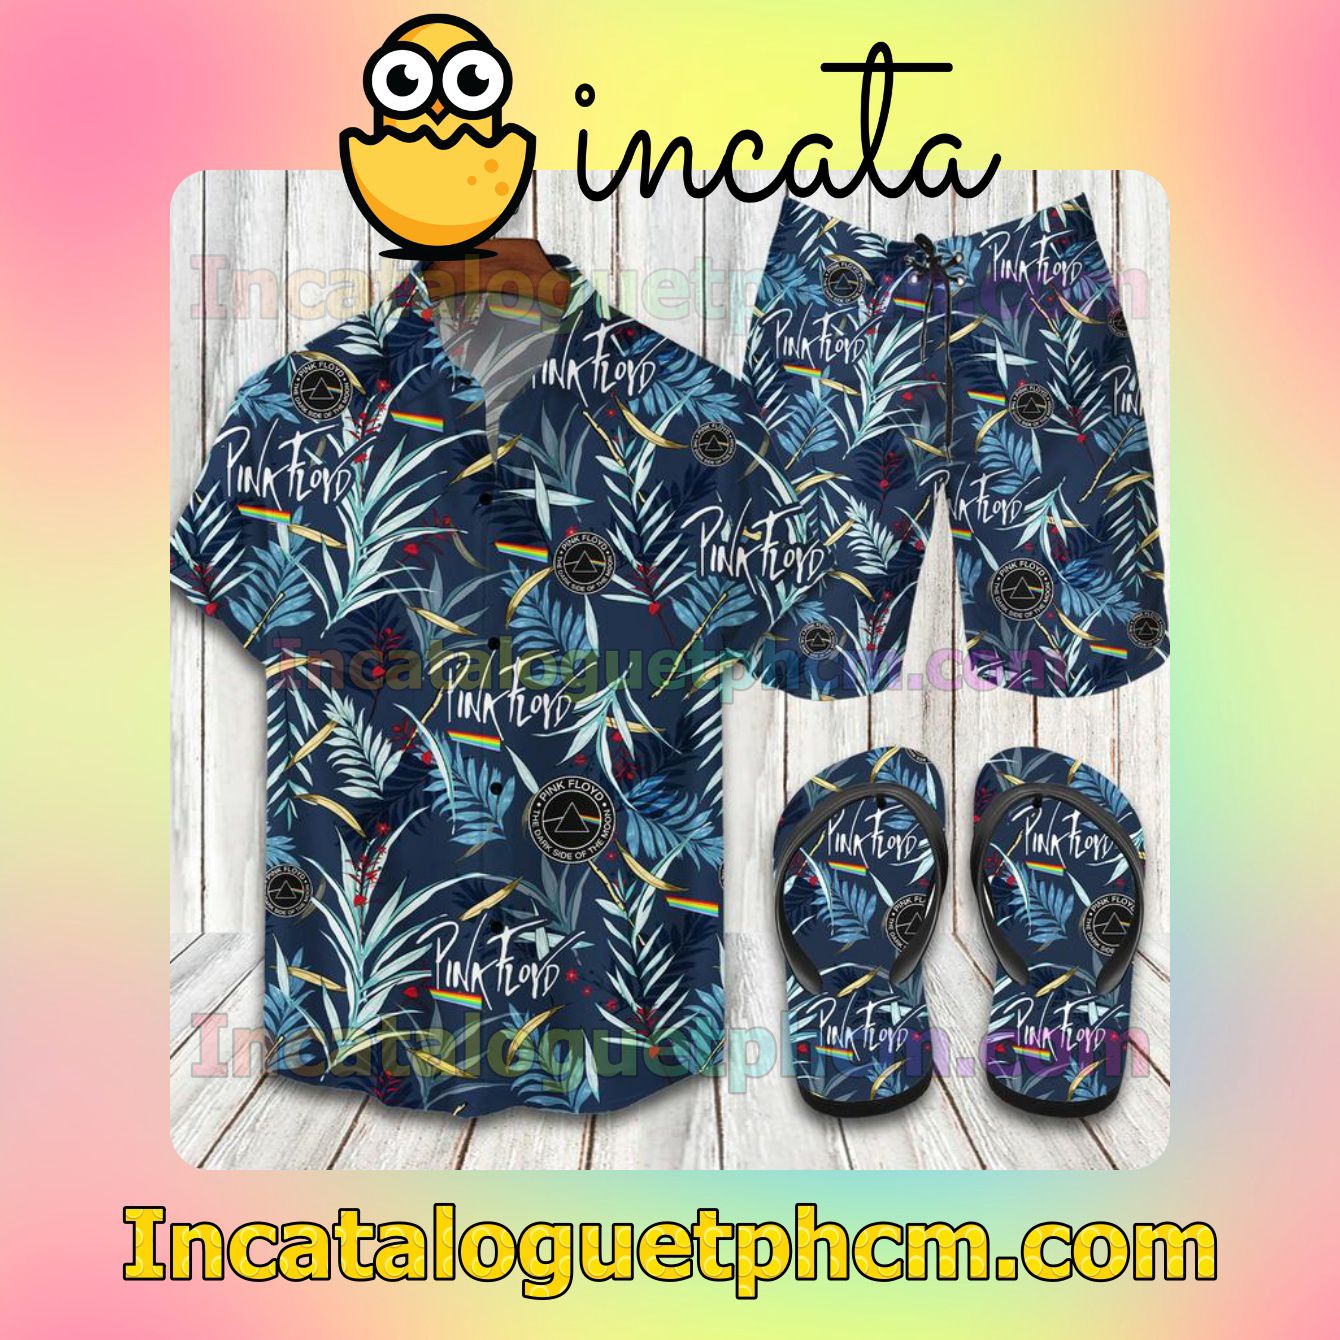 Funny Tee Pink Floyd Aloha Shirt And Shorts